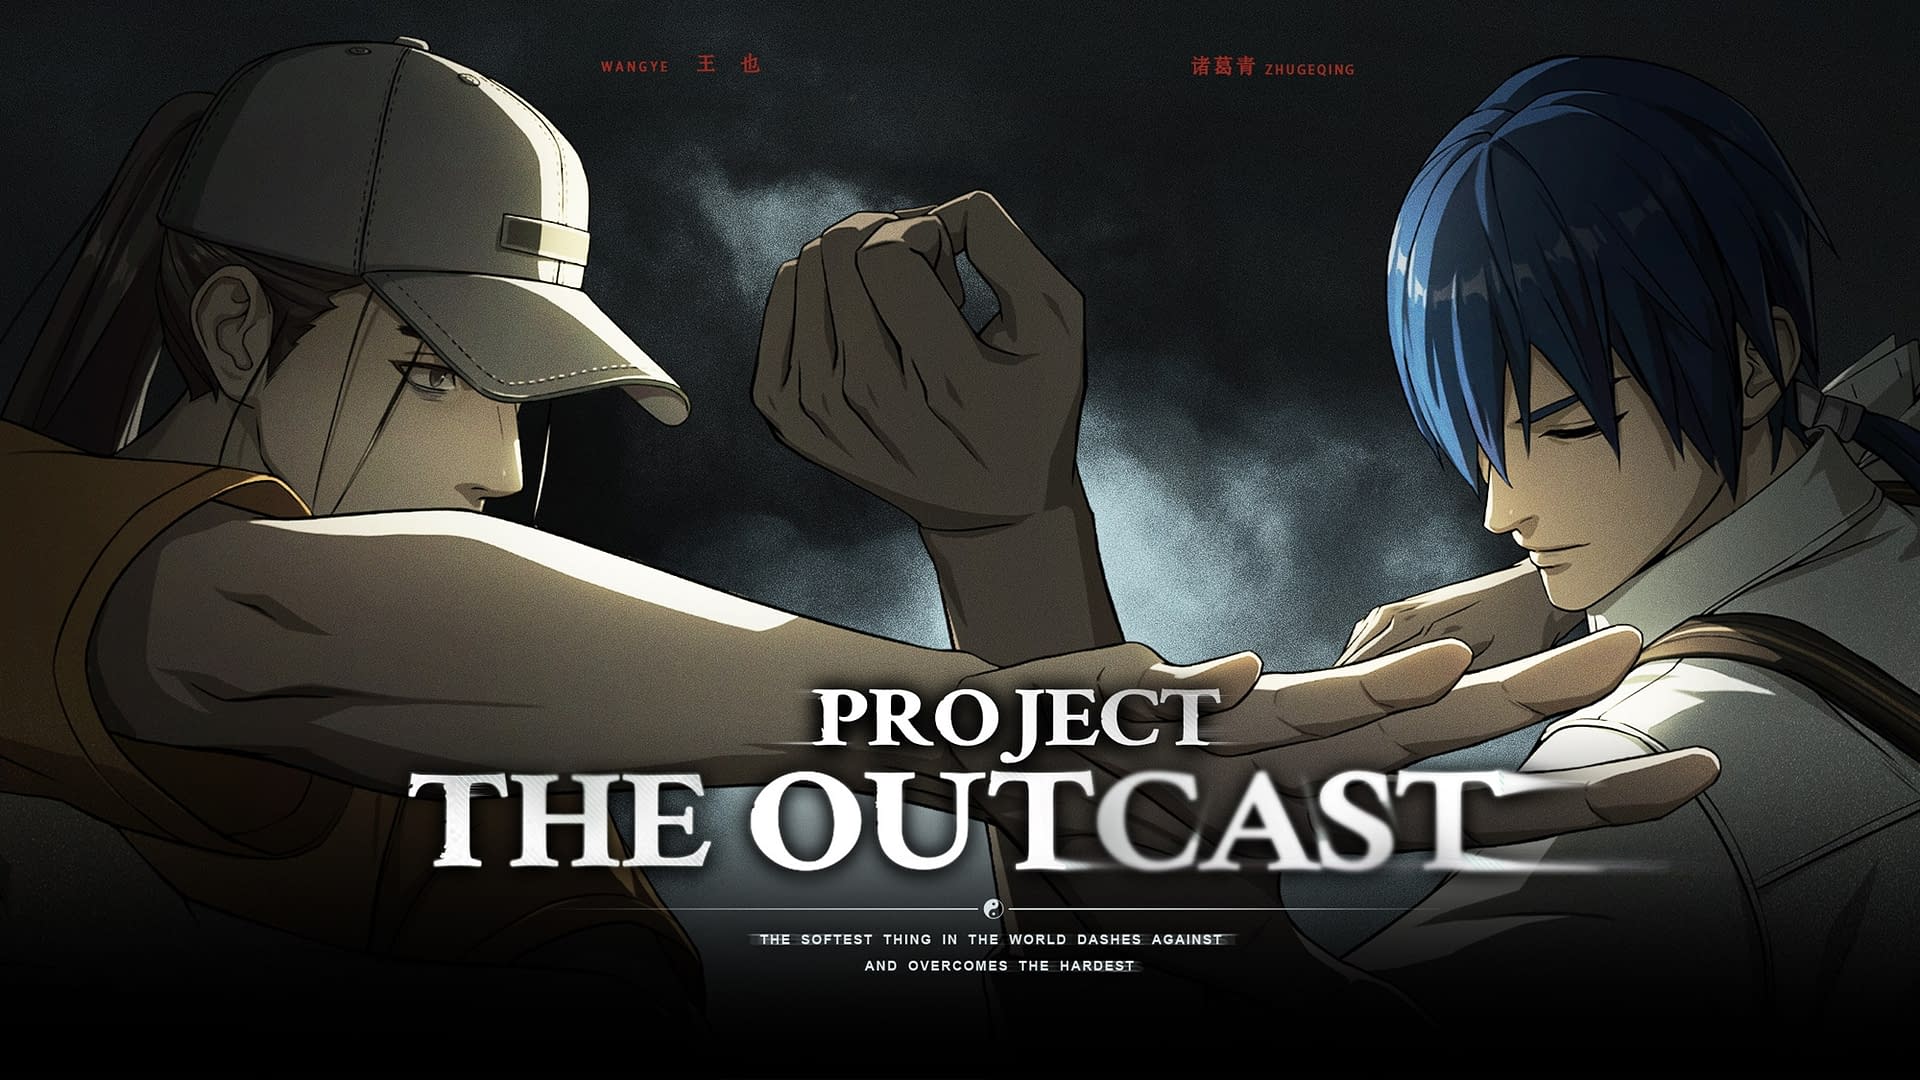 A mobile title based on Hitori No Shita: The Outcast showcases jaw